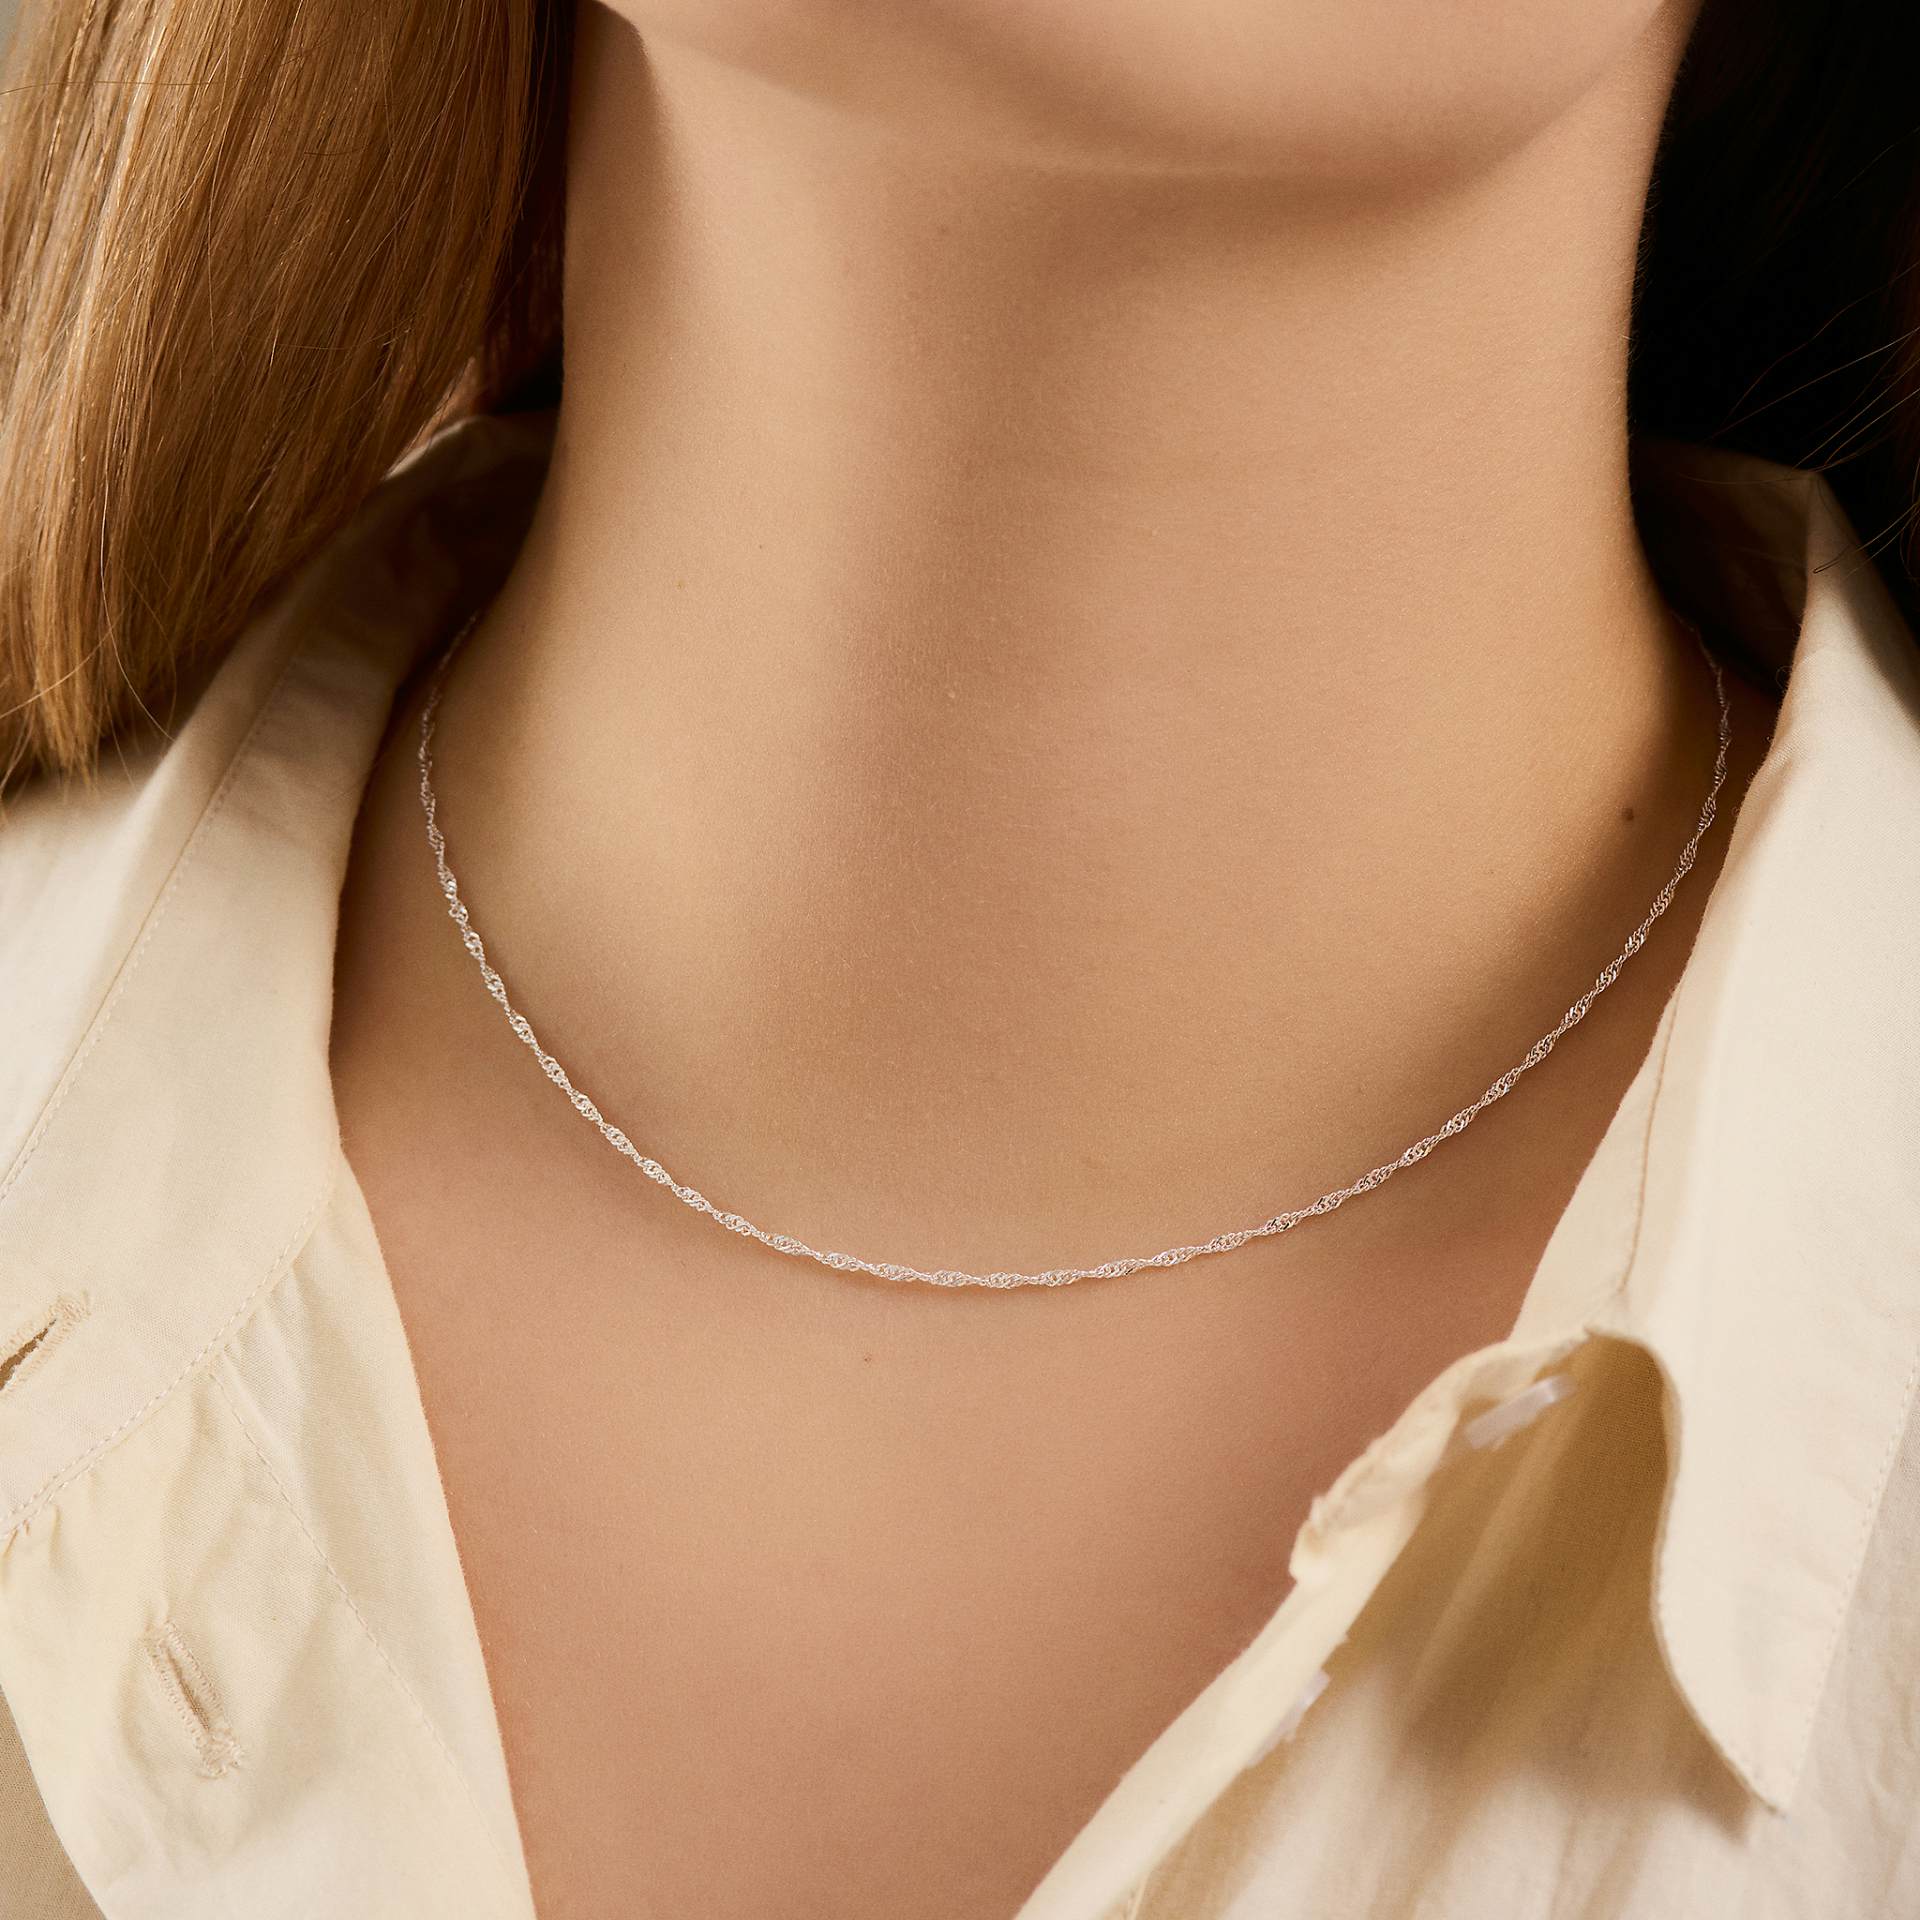 Singapore necklace short von Pernille Corydon in Vergoldet-Silber Sterling 925|Blank